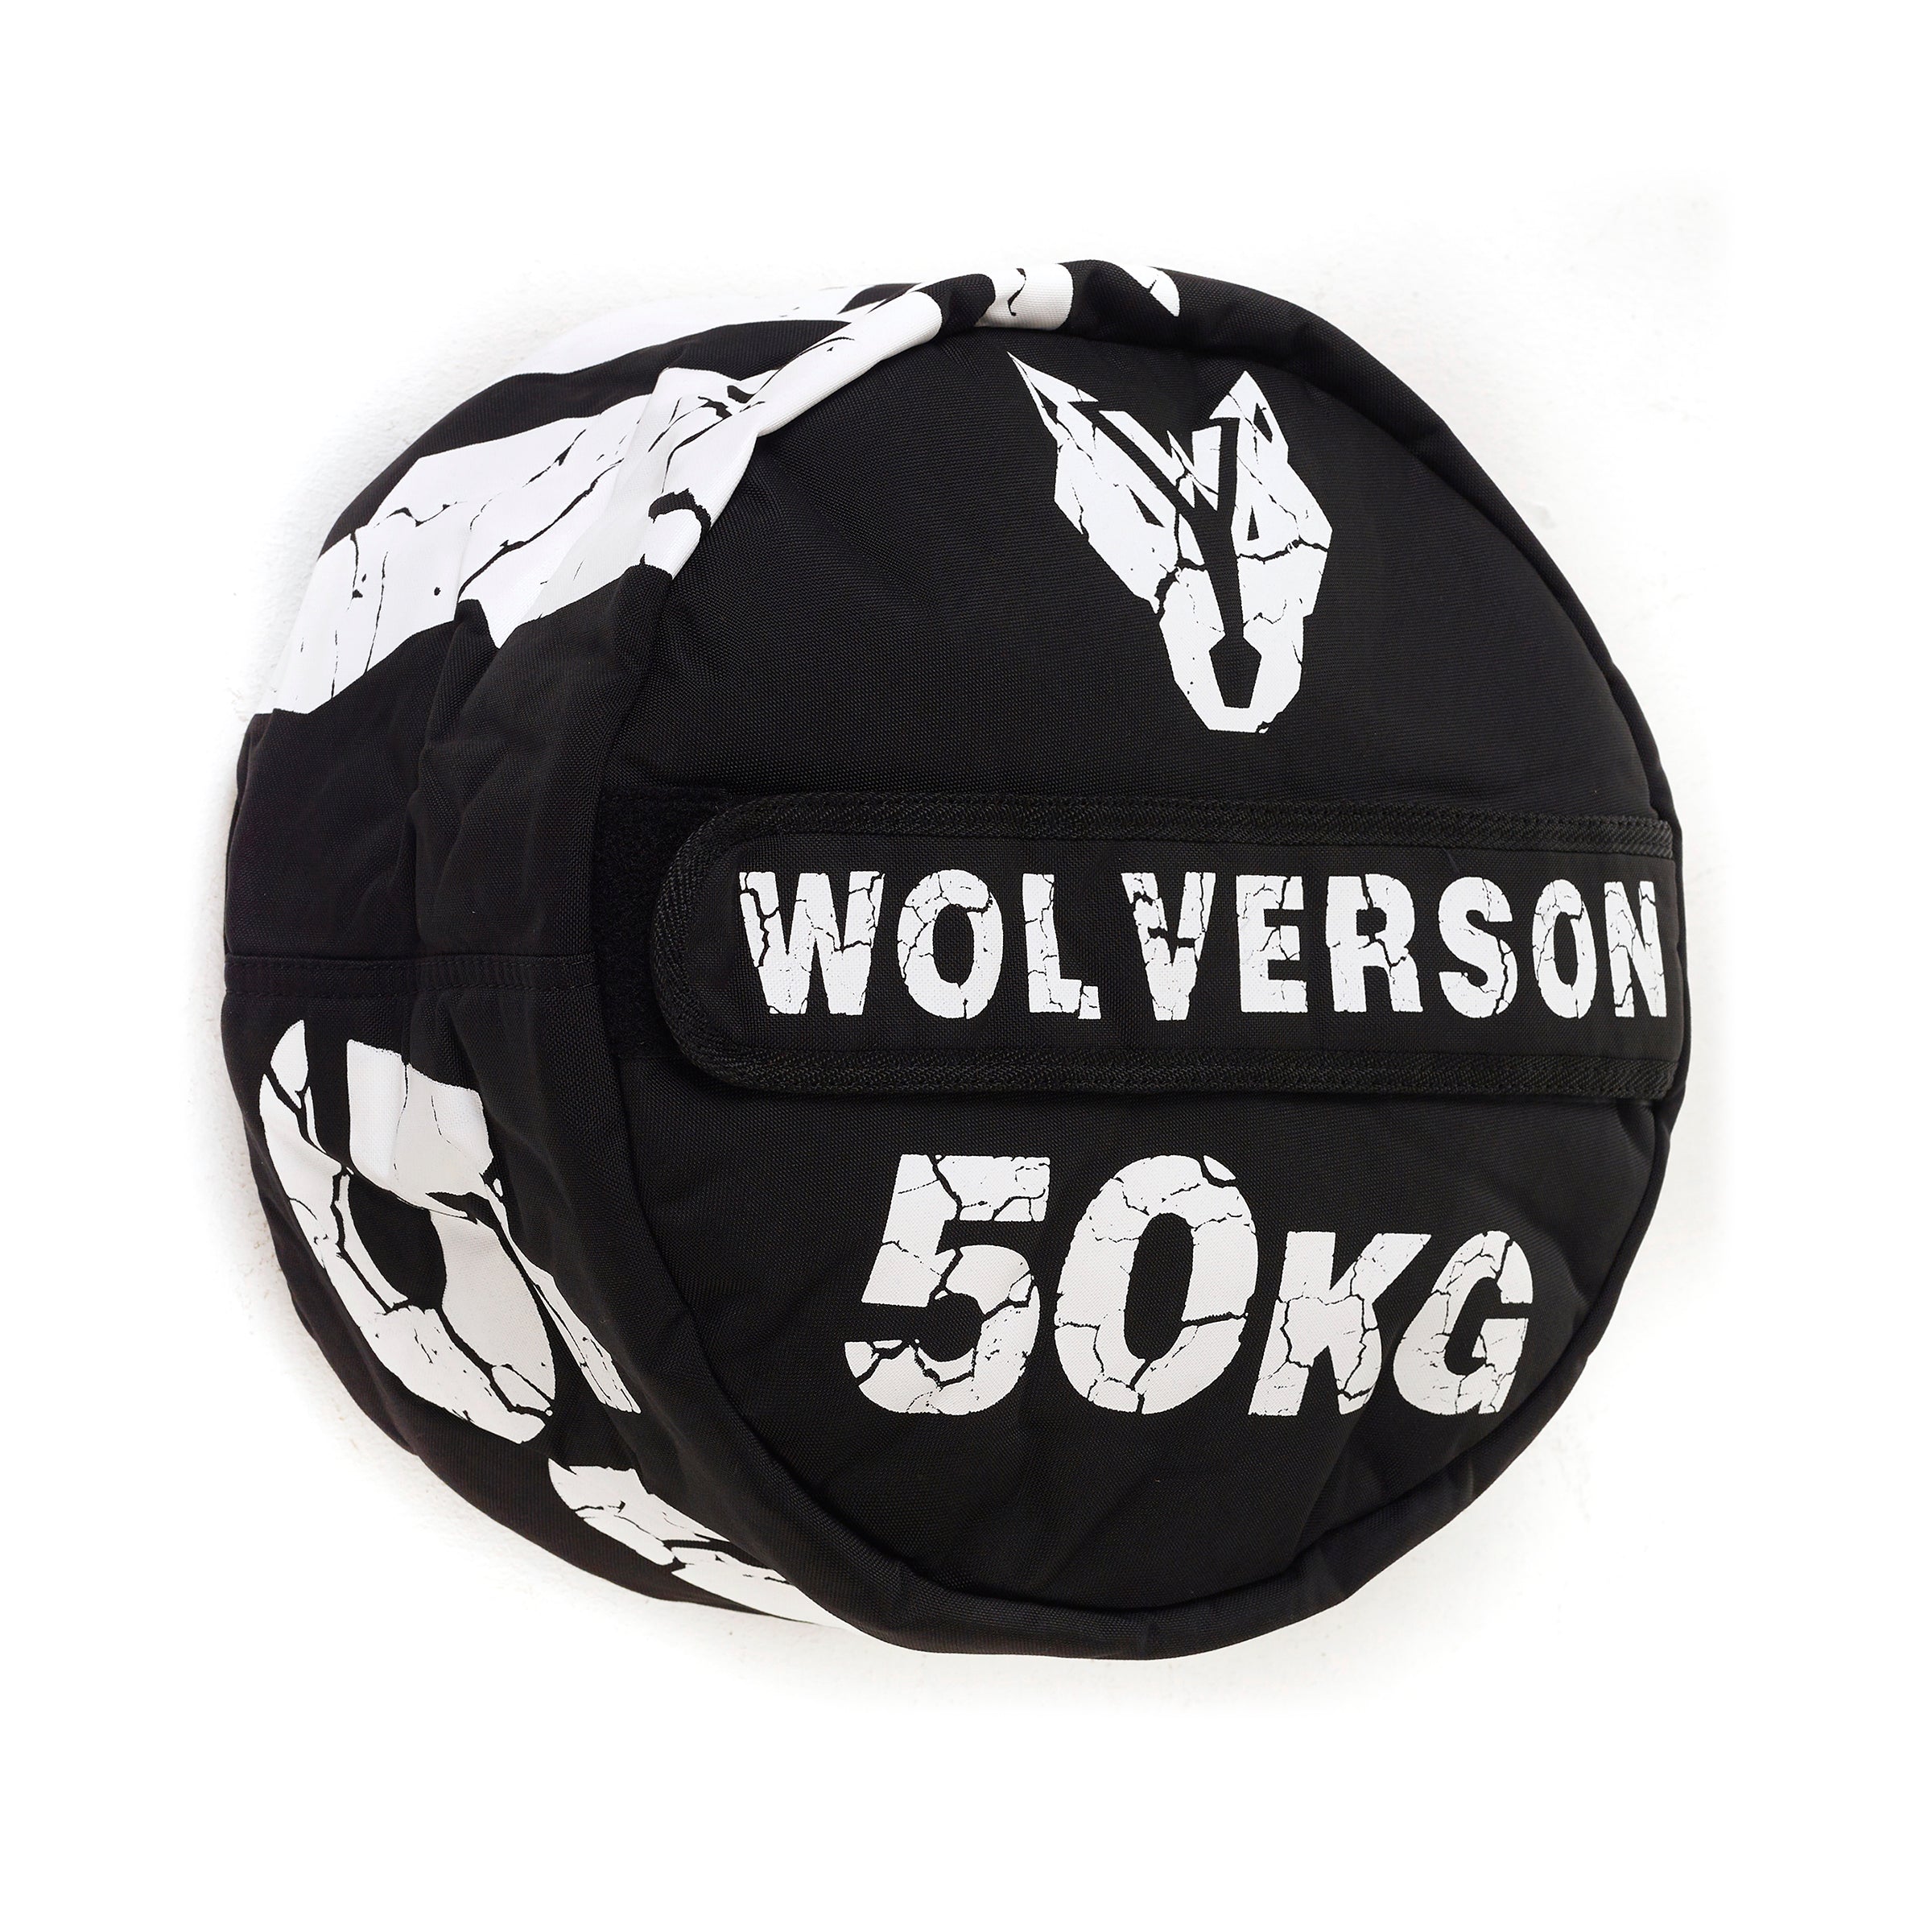 Wolverson Strongman Sandbags - Wolverson Fitness